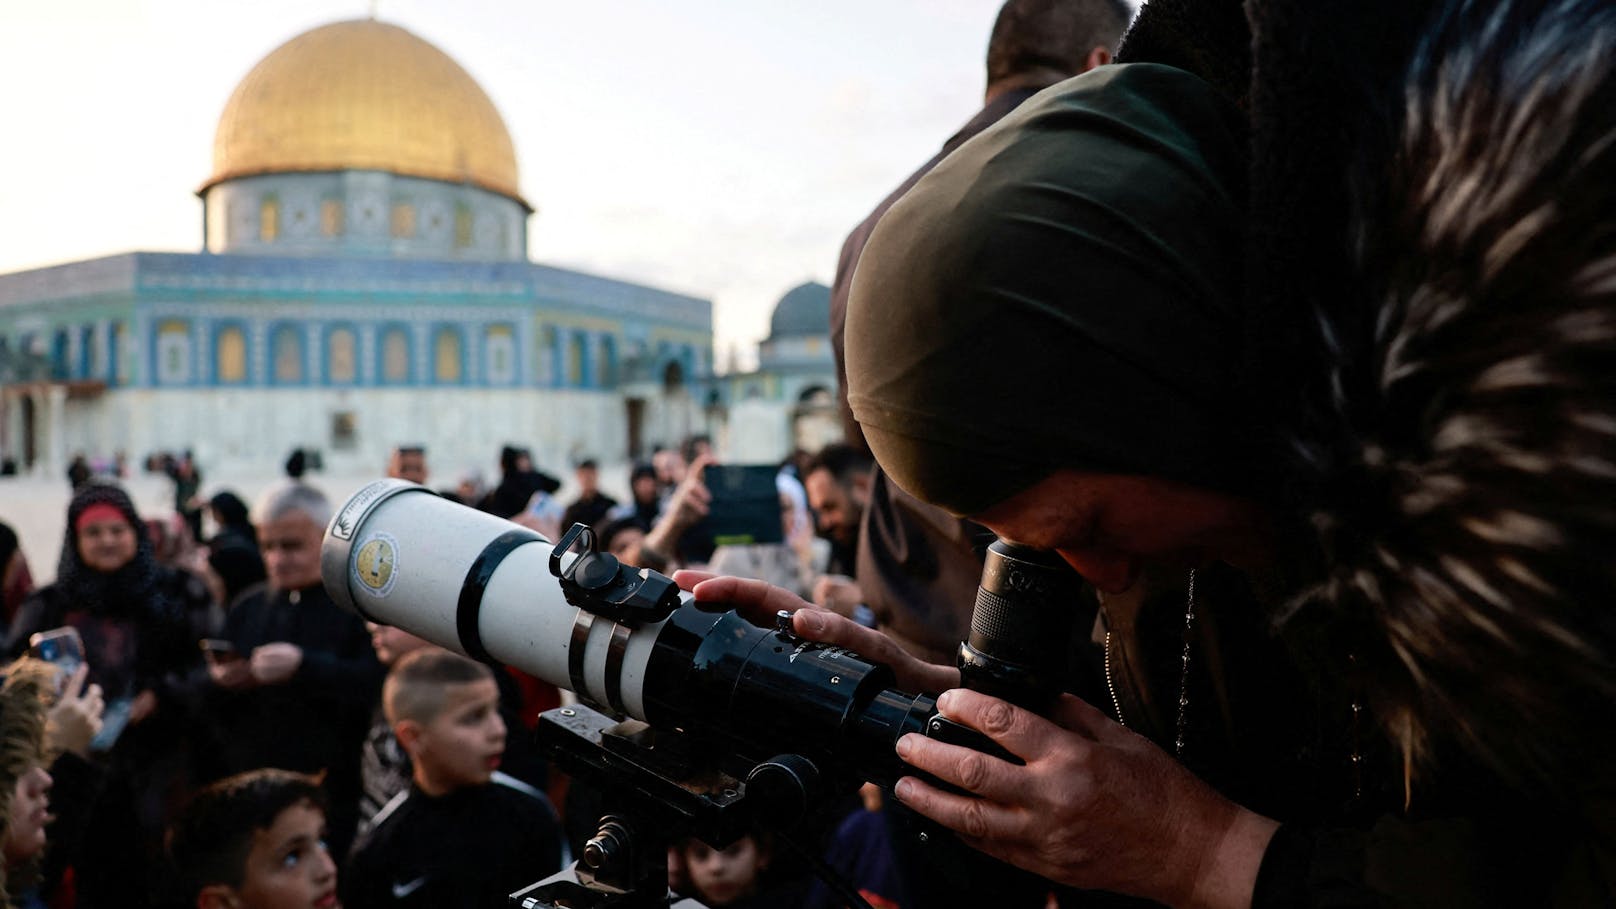 "Höchste Alarmstufe" in Israel zu Ramadan-Beginn